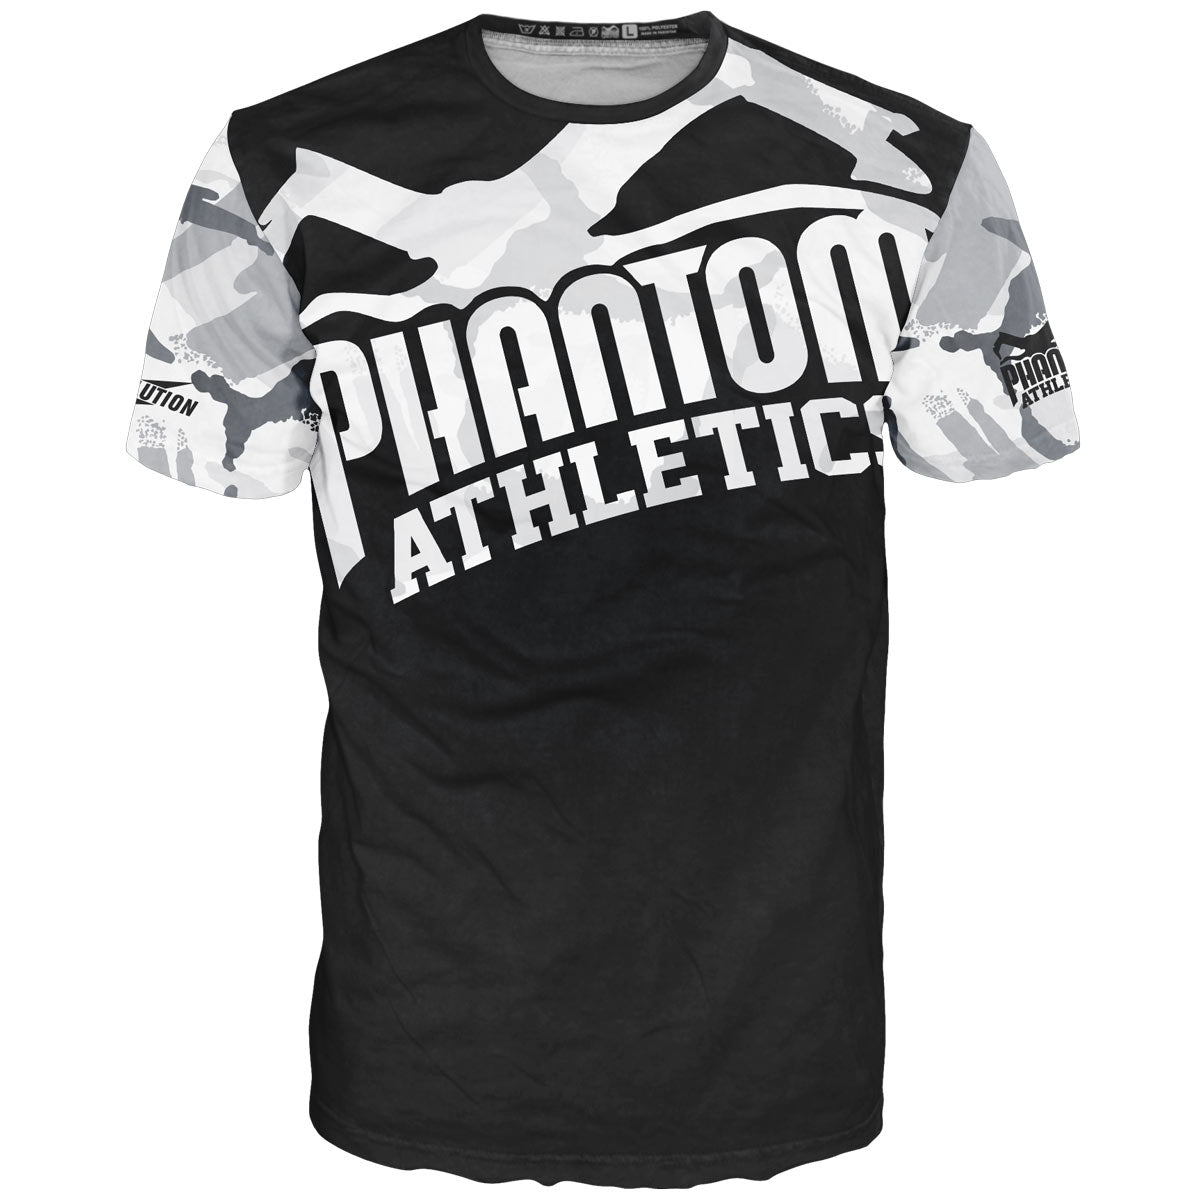 Phantom Kampfsport EVO Trainingsshirt im Winter/Urban Camo Look. Atmungsaktives Performance Trainingsshirt für MMA, Muay Thai, BJJ und Kickboxen.